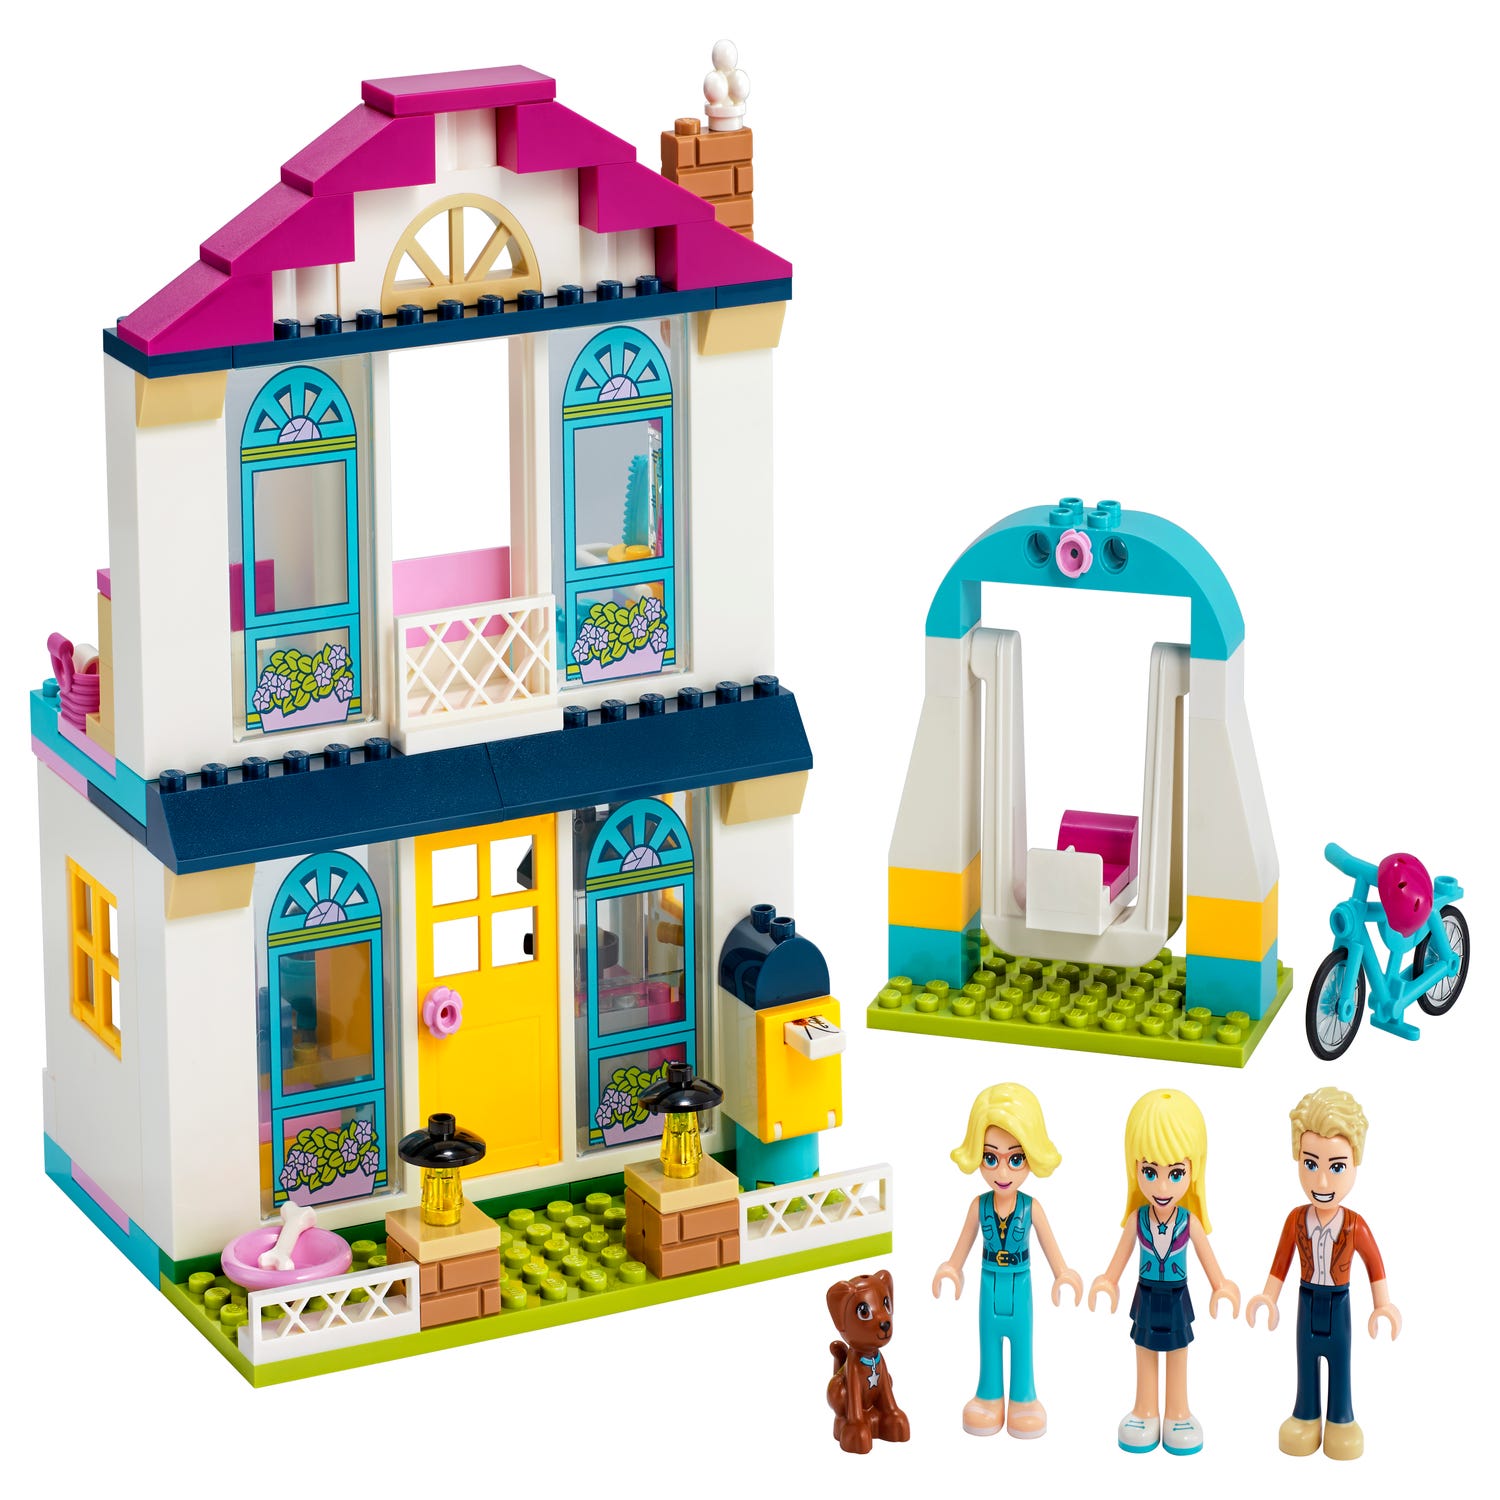 LEGO Friends Stephanie's House Building Set - wide 1